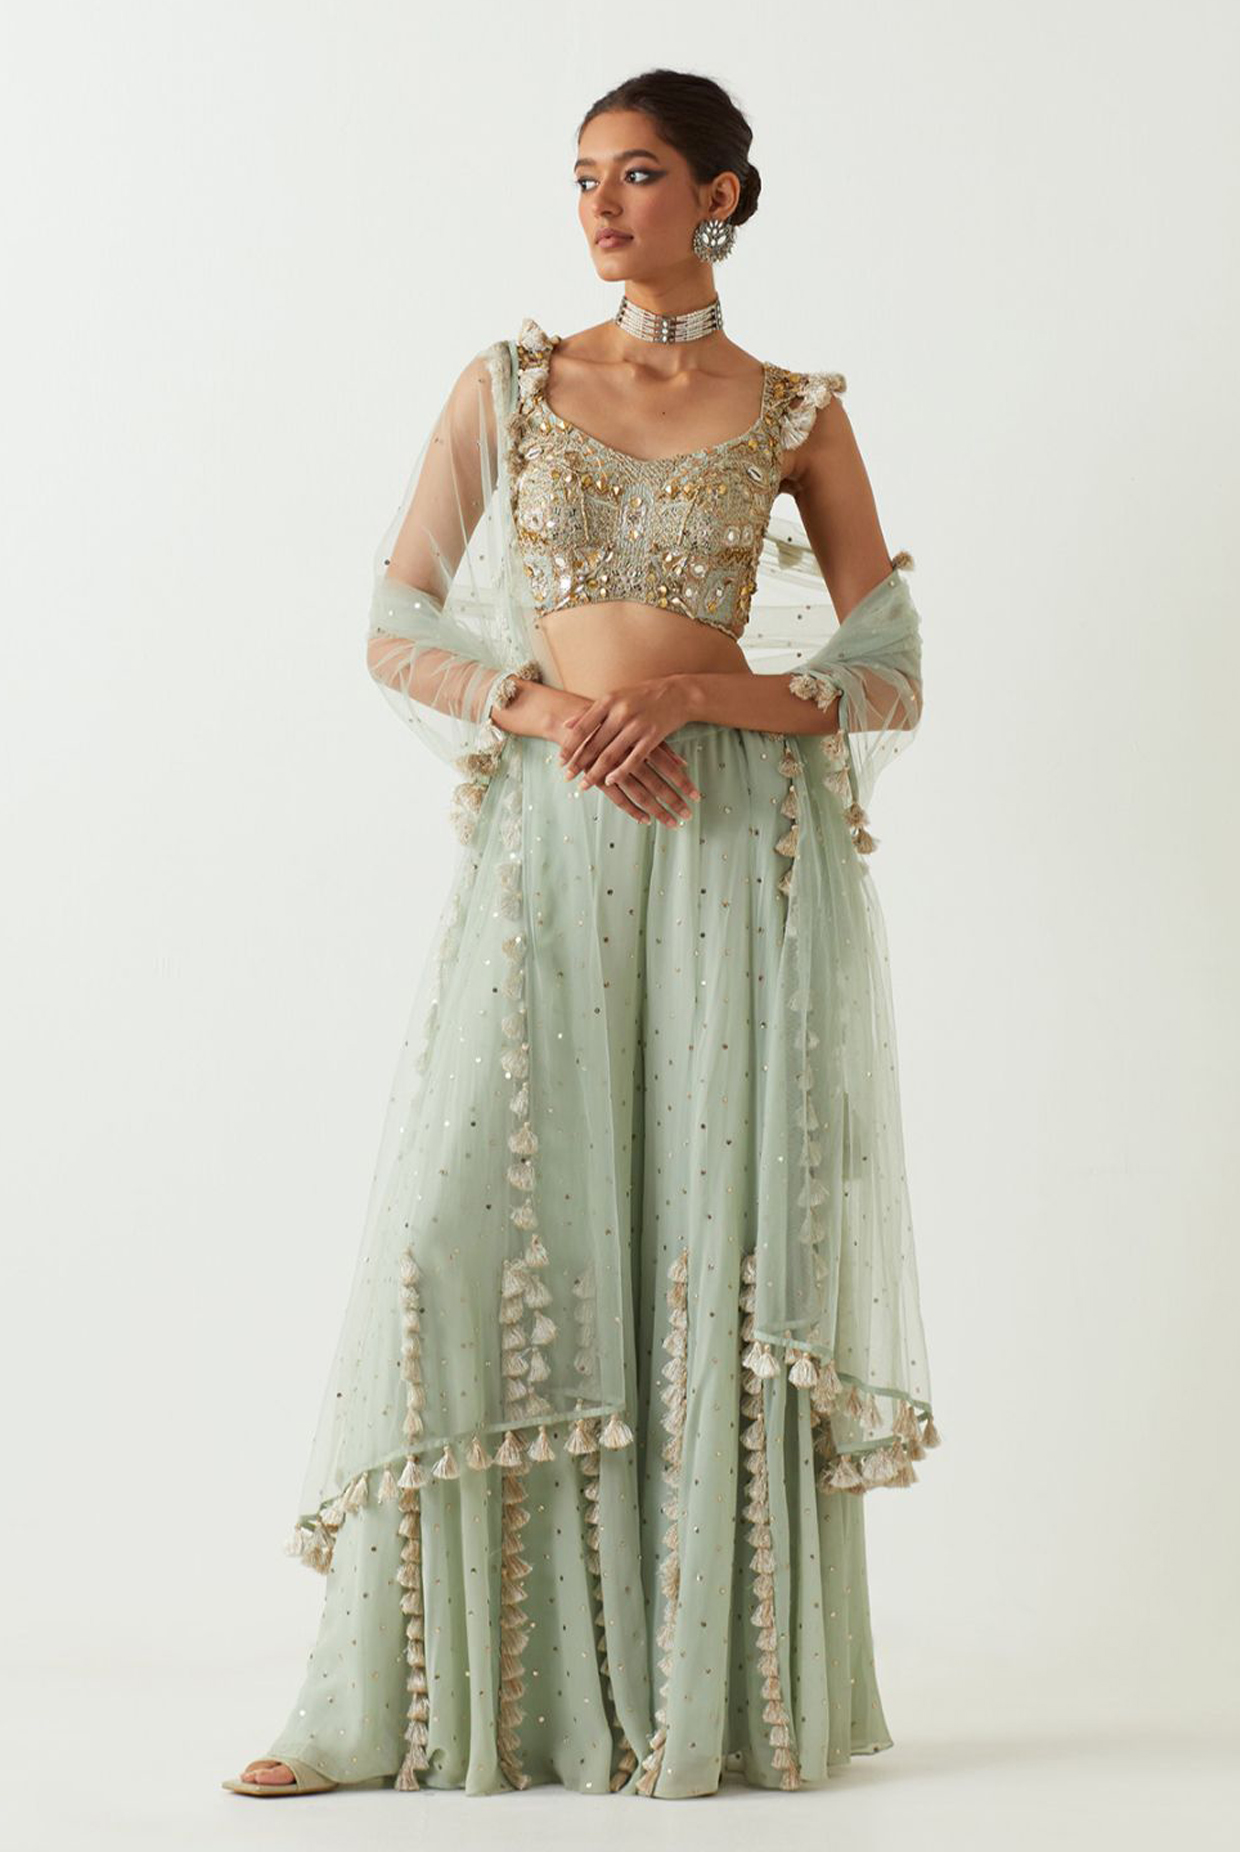 Best New Gharara Sharara Dress for Wedding | New Trend of Sharara